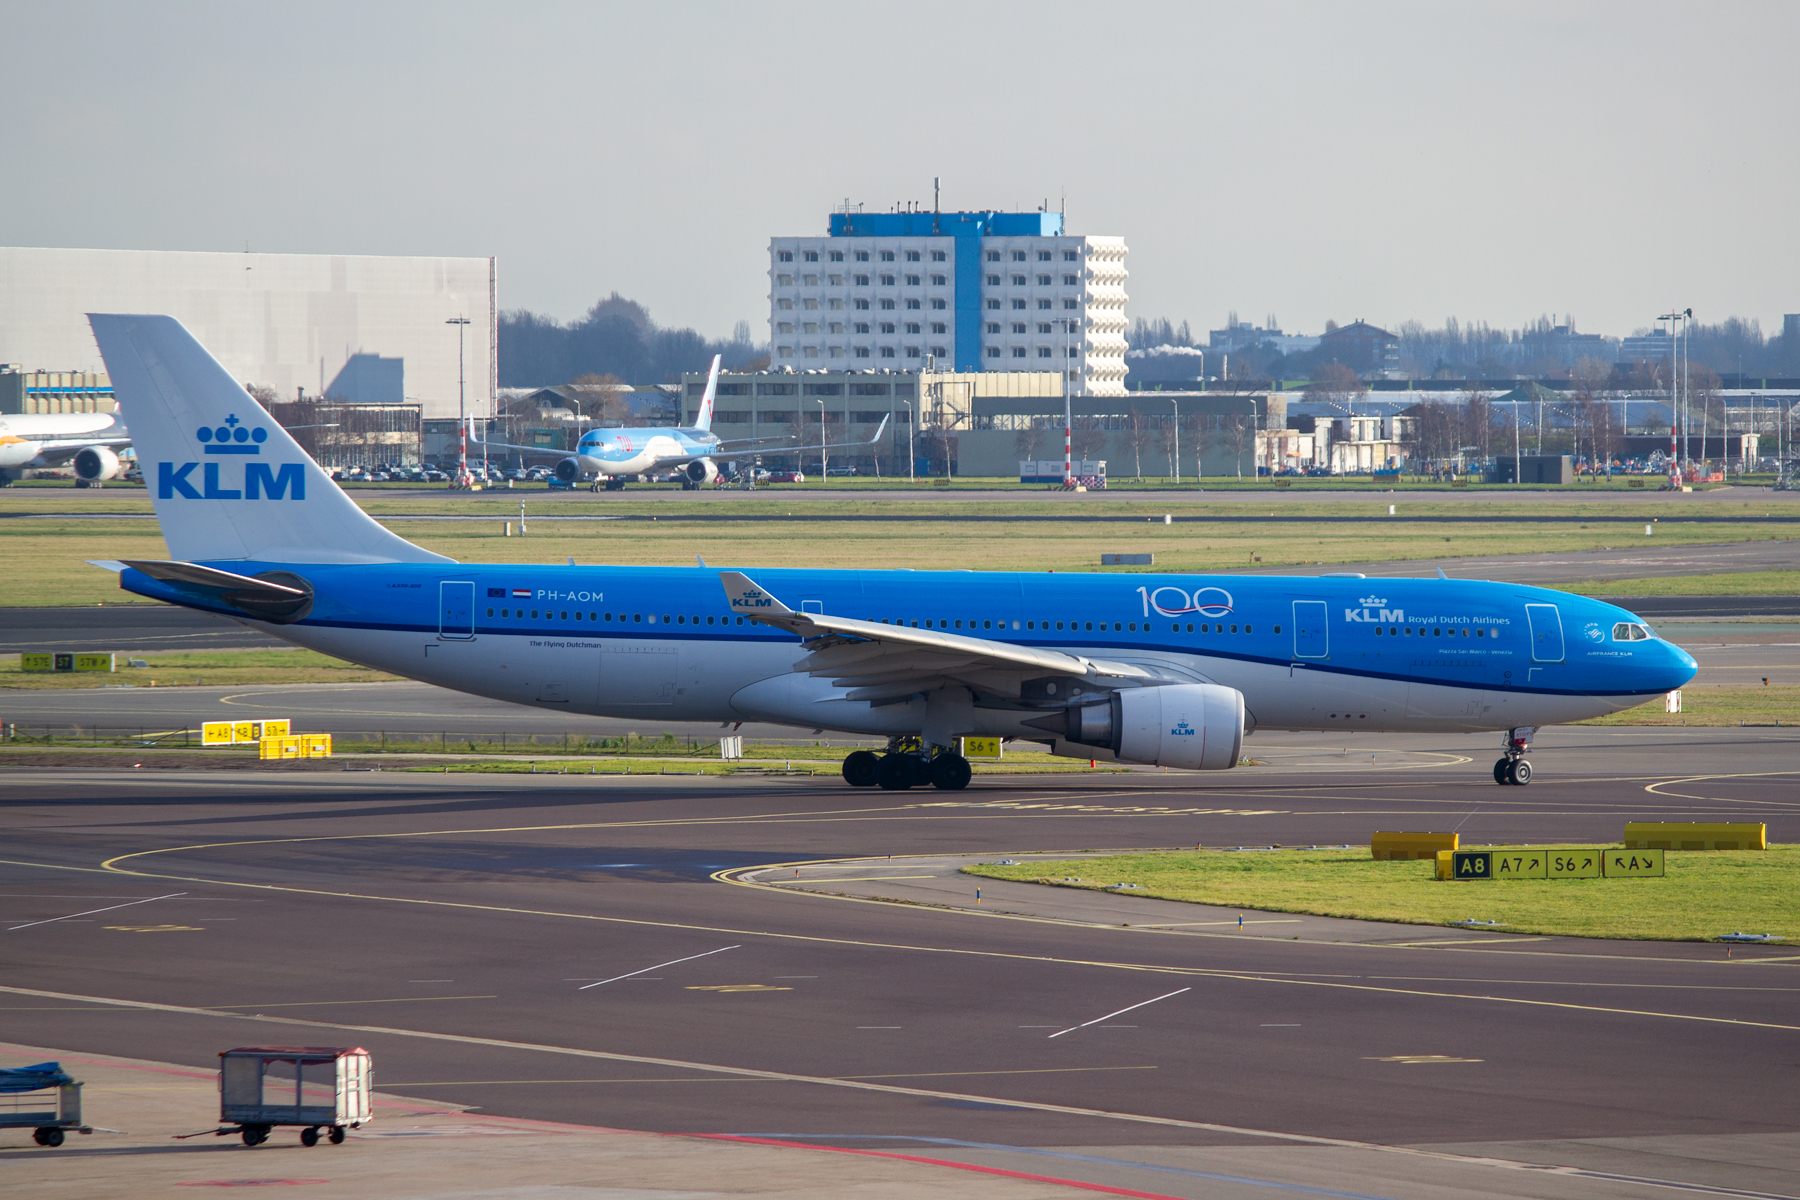 KLM Airbus A330-200 PH-AOM at Schiphol